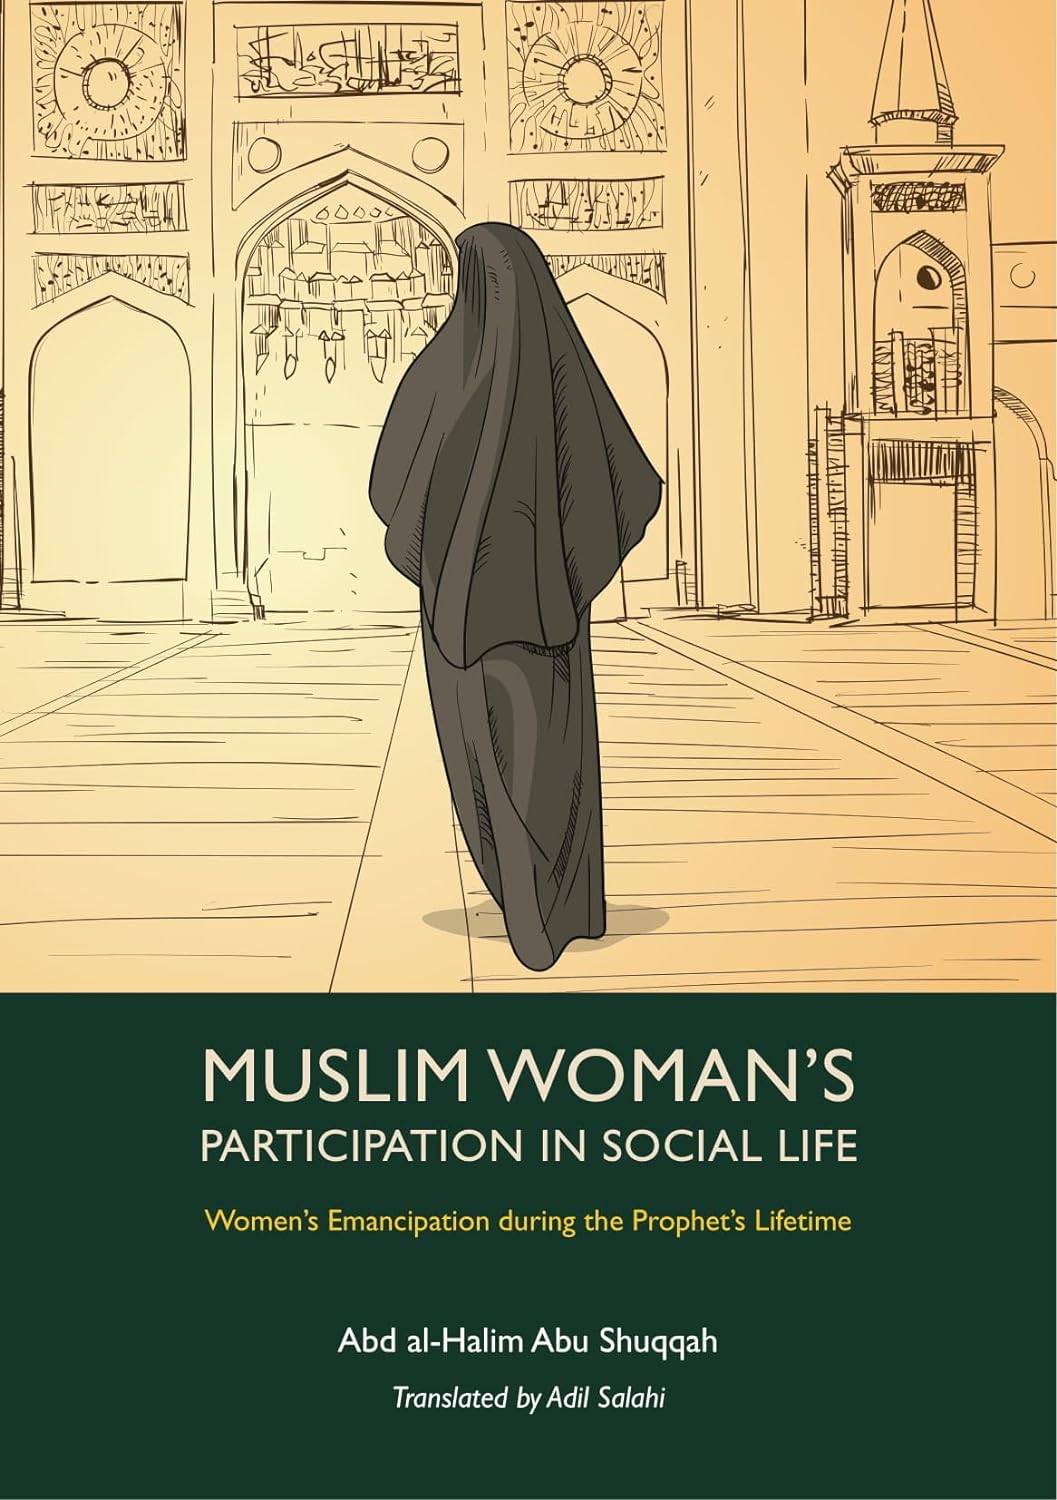 Women's Emancipation during the Prophet's Lifetime: (Muslim Woman's Participation in Social Life) Volume 2/8